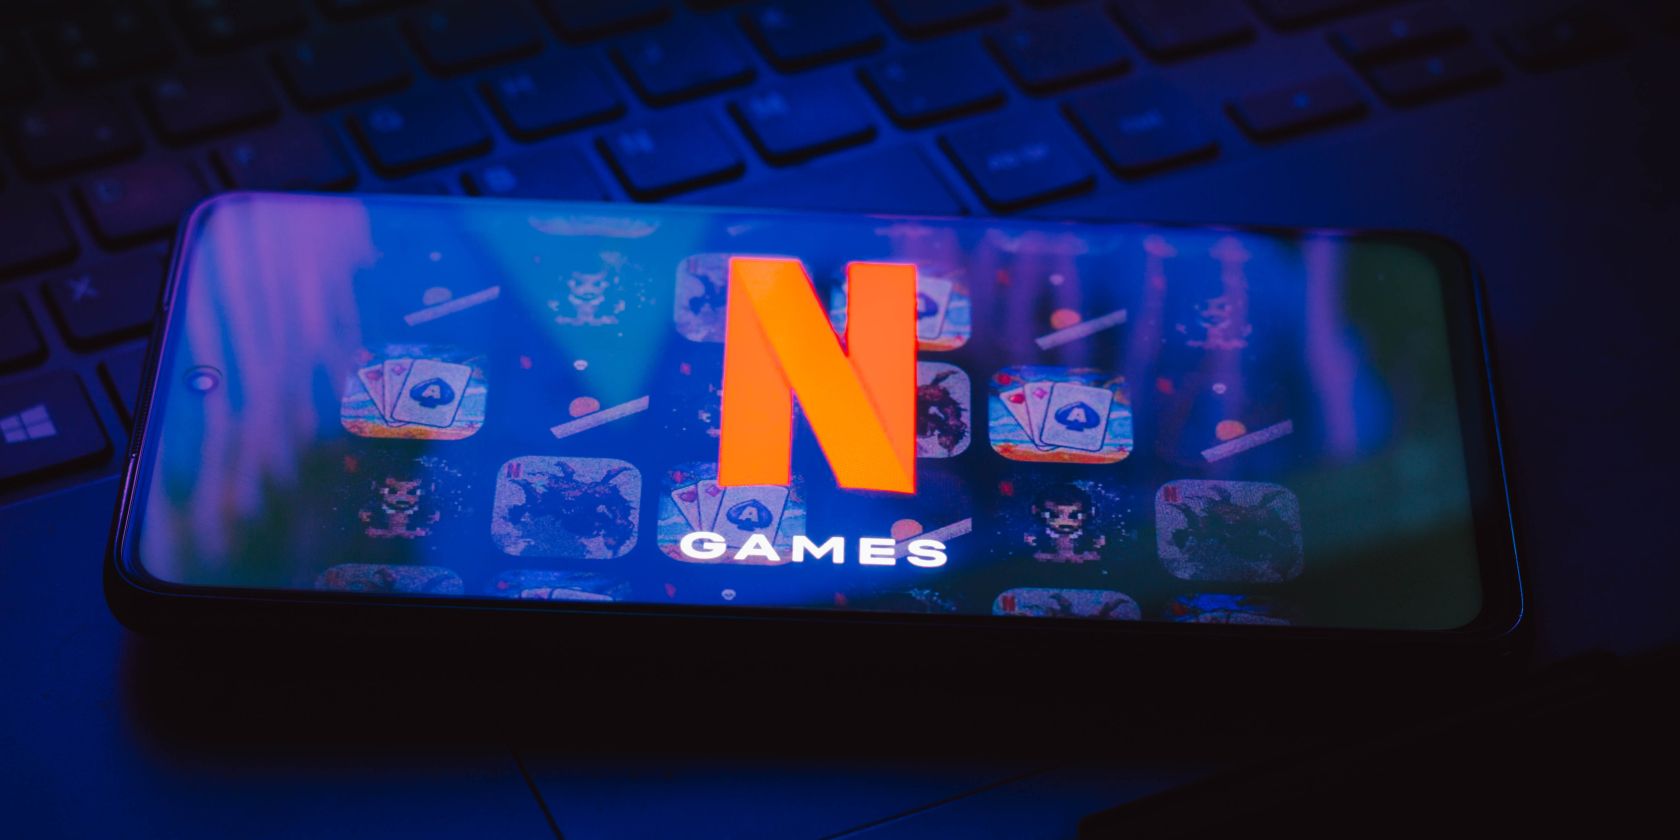 netflix games logo on phone